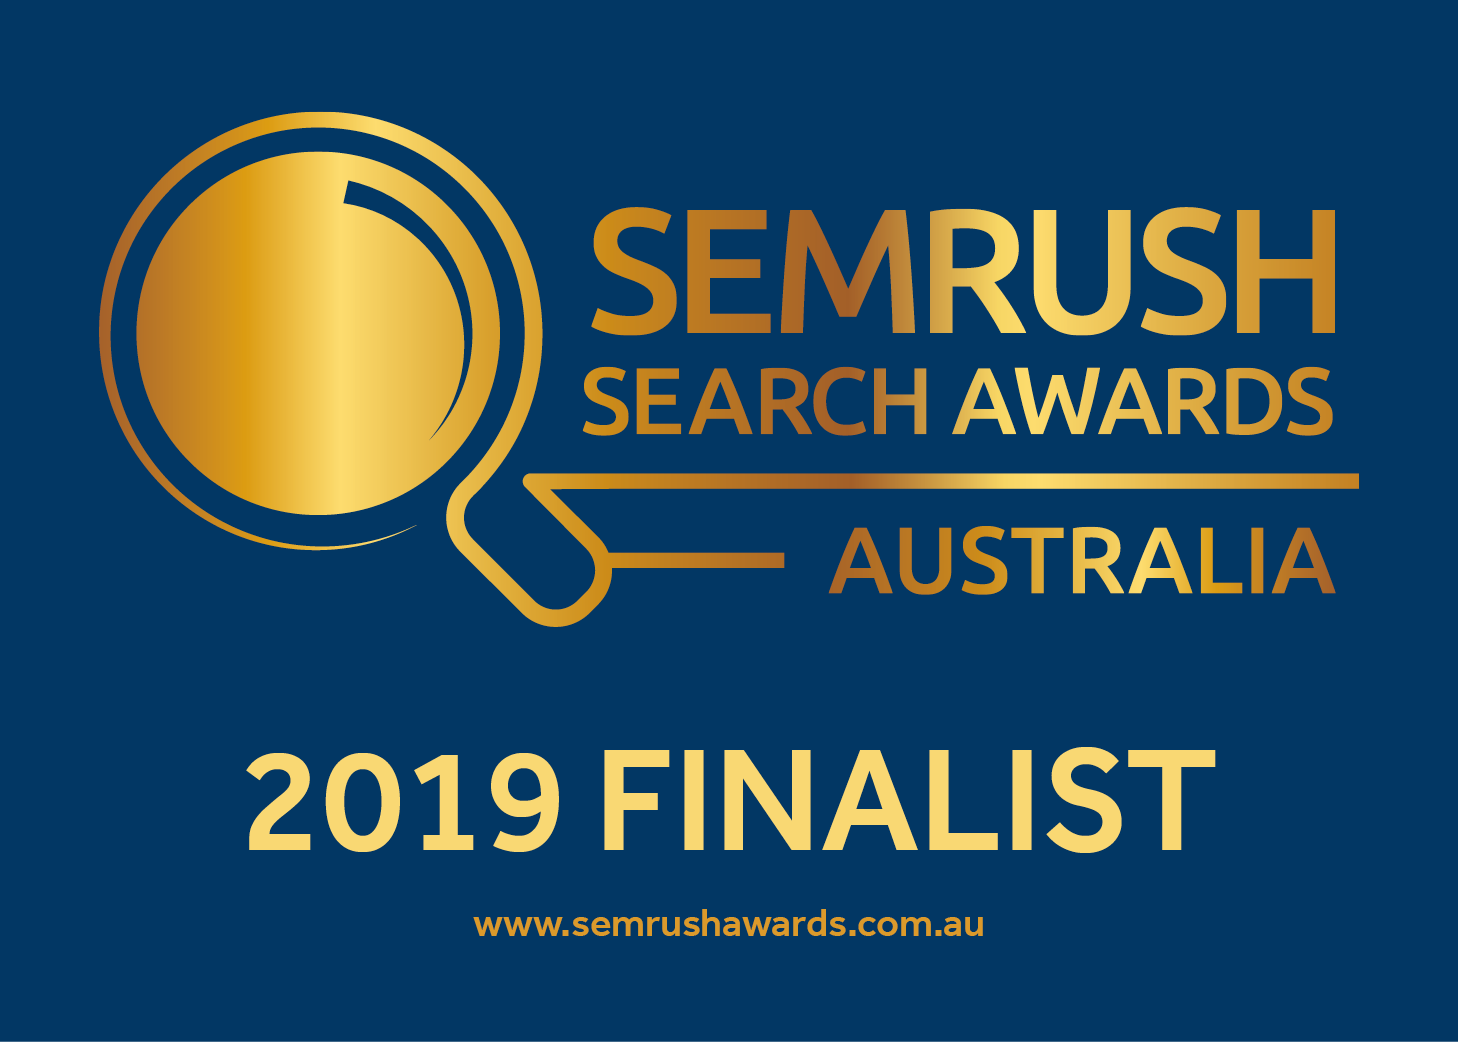 Semrush Search Awards